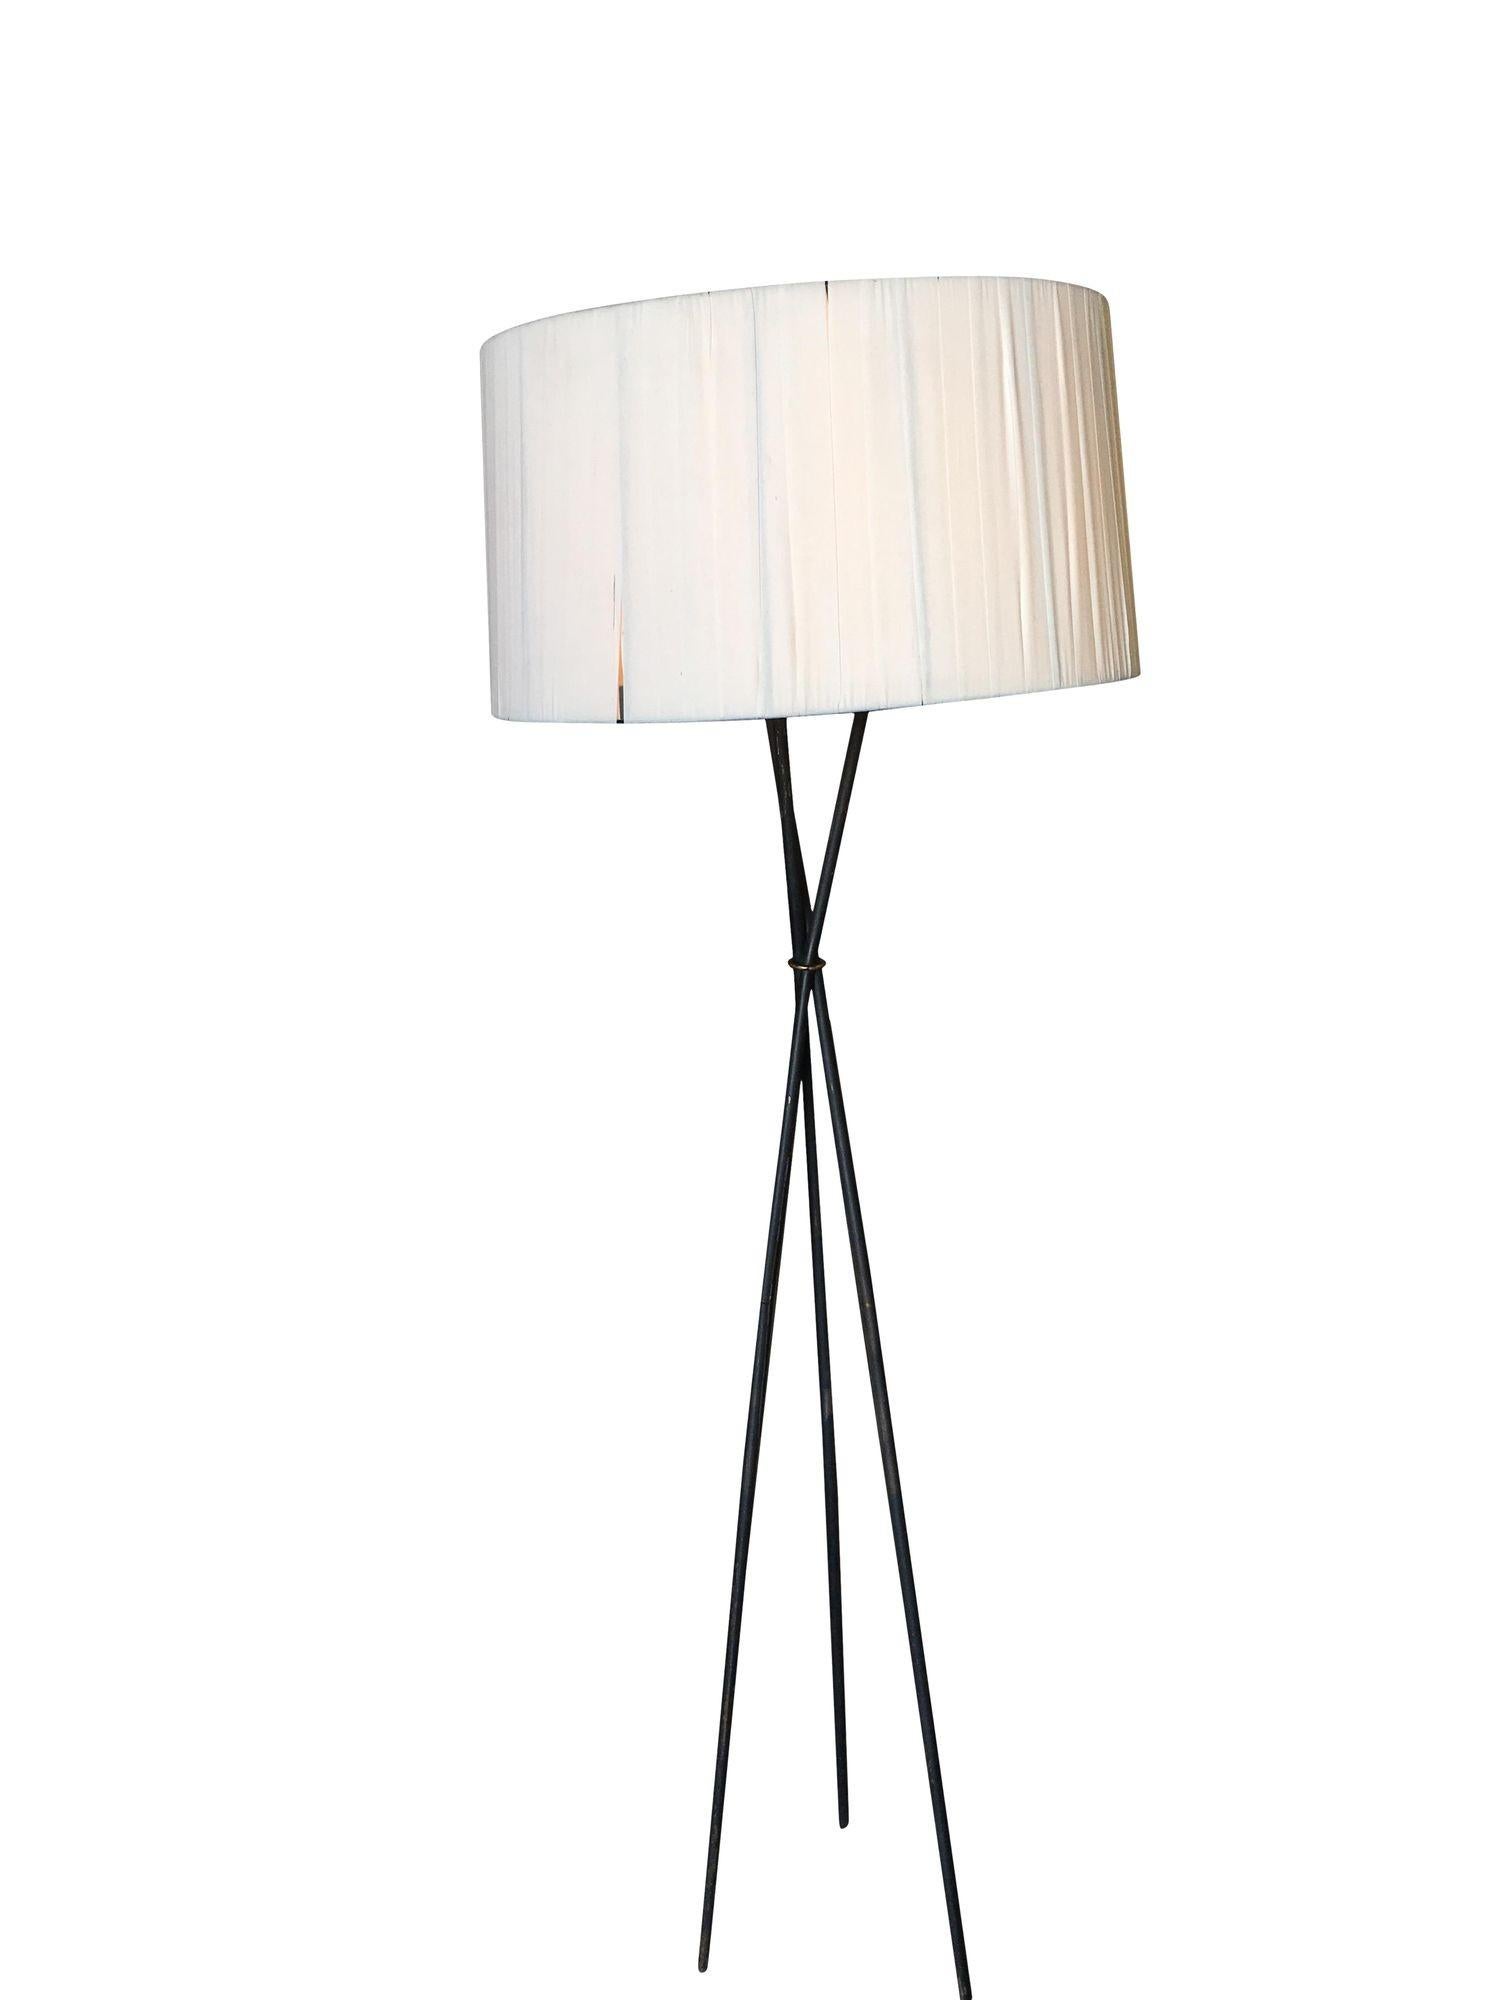 Midcentury black iron rod tripod floor lamp with oversized white lamp shade.